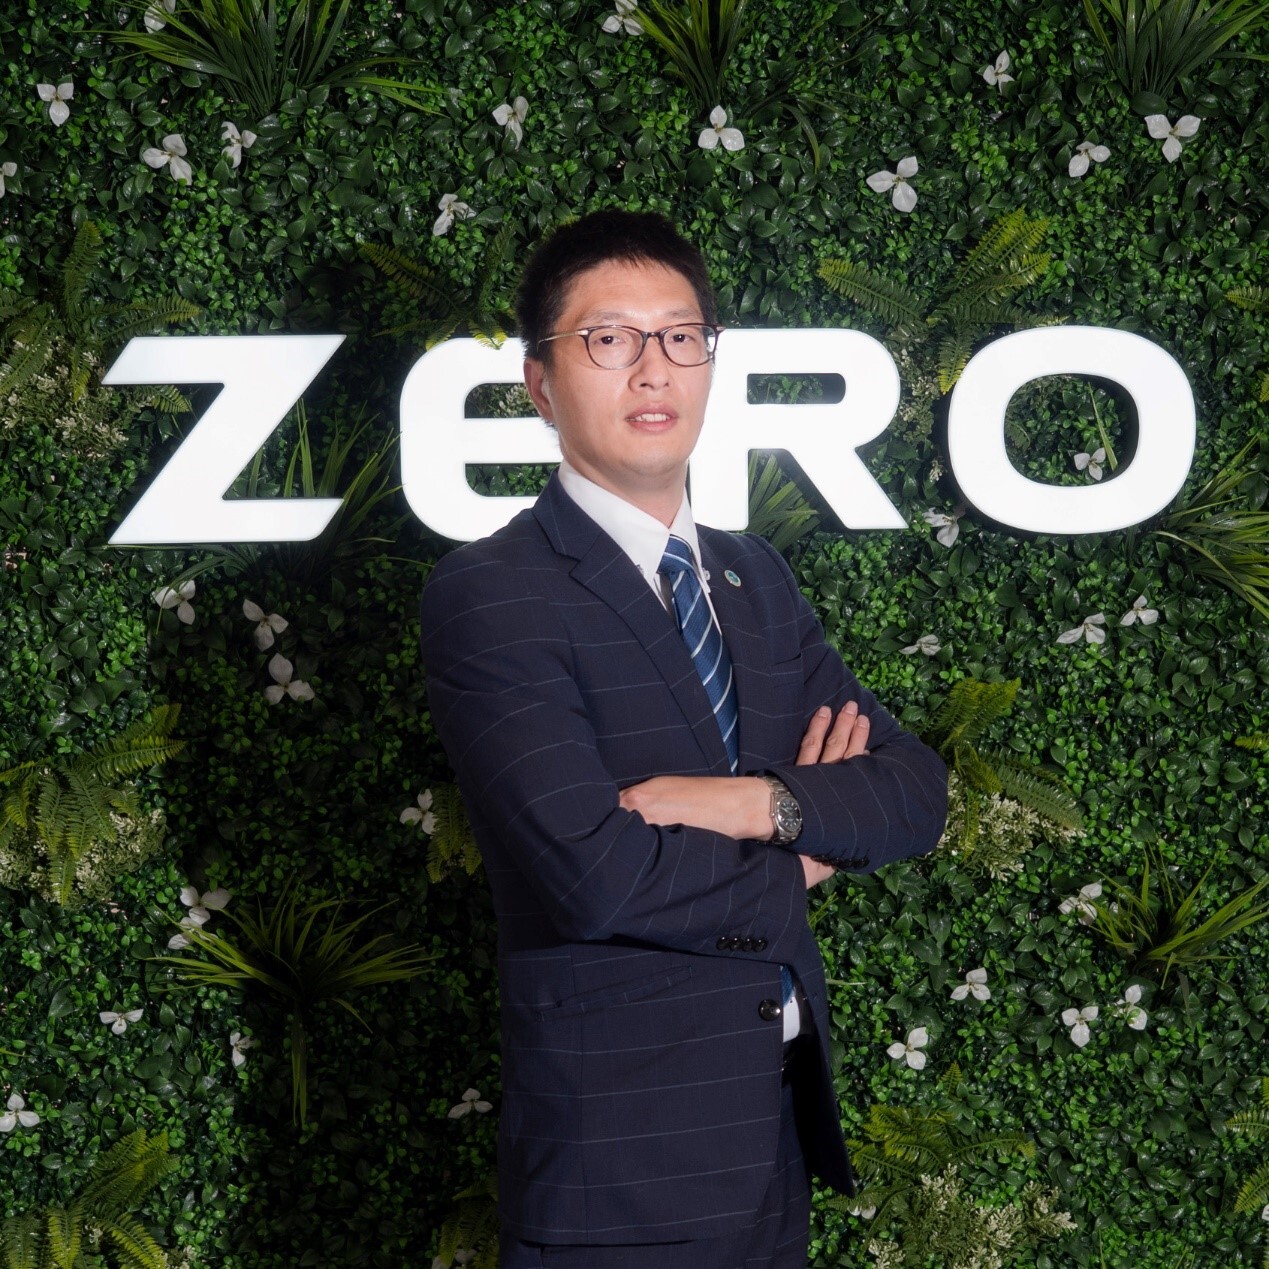 ZERO商事株式会社 代表取締役社長・陳海氏のインタビュー記事を
「人民日報海外版日本月刊」にて公開 – Net24